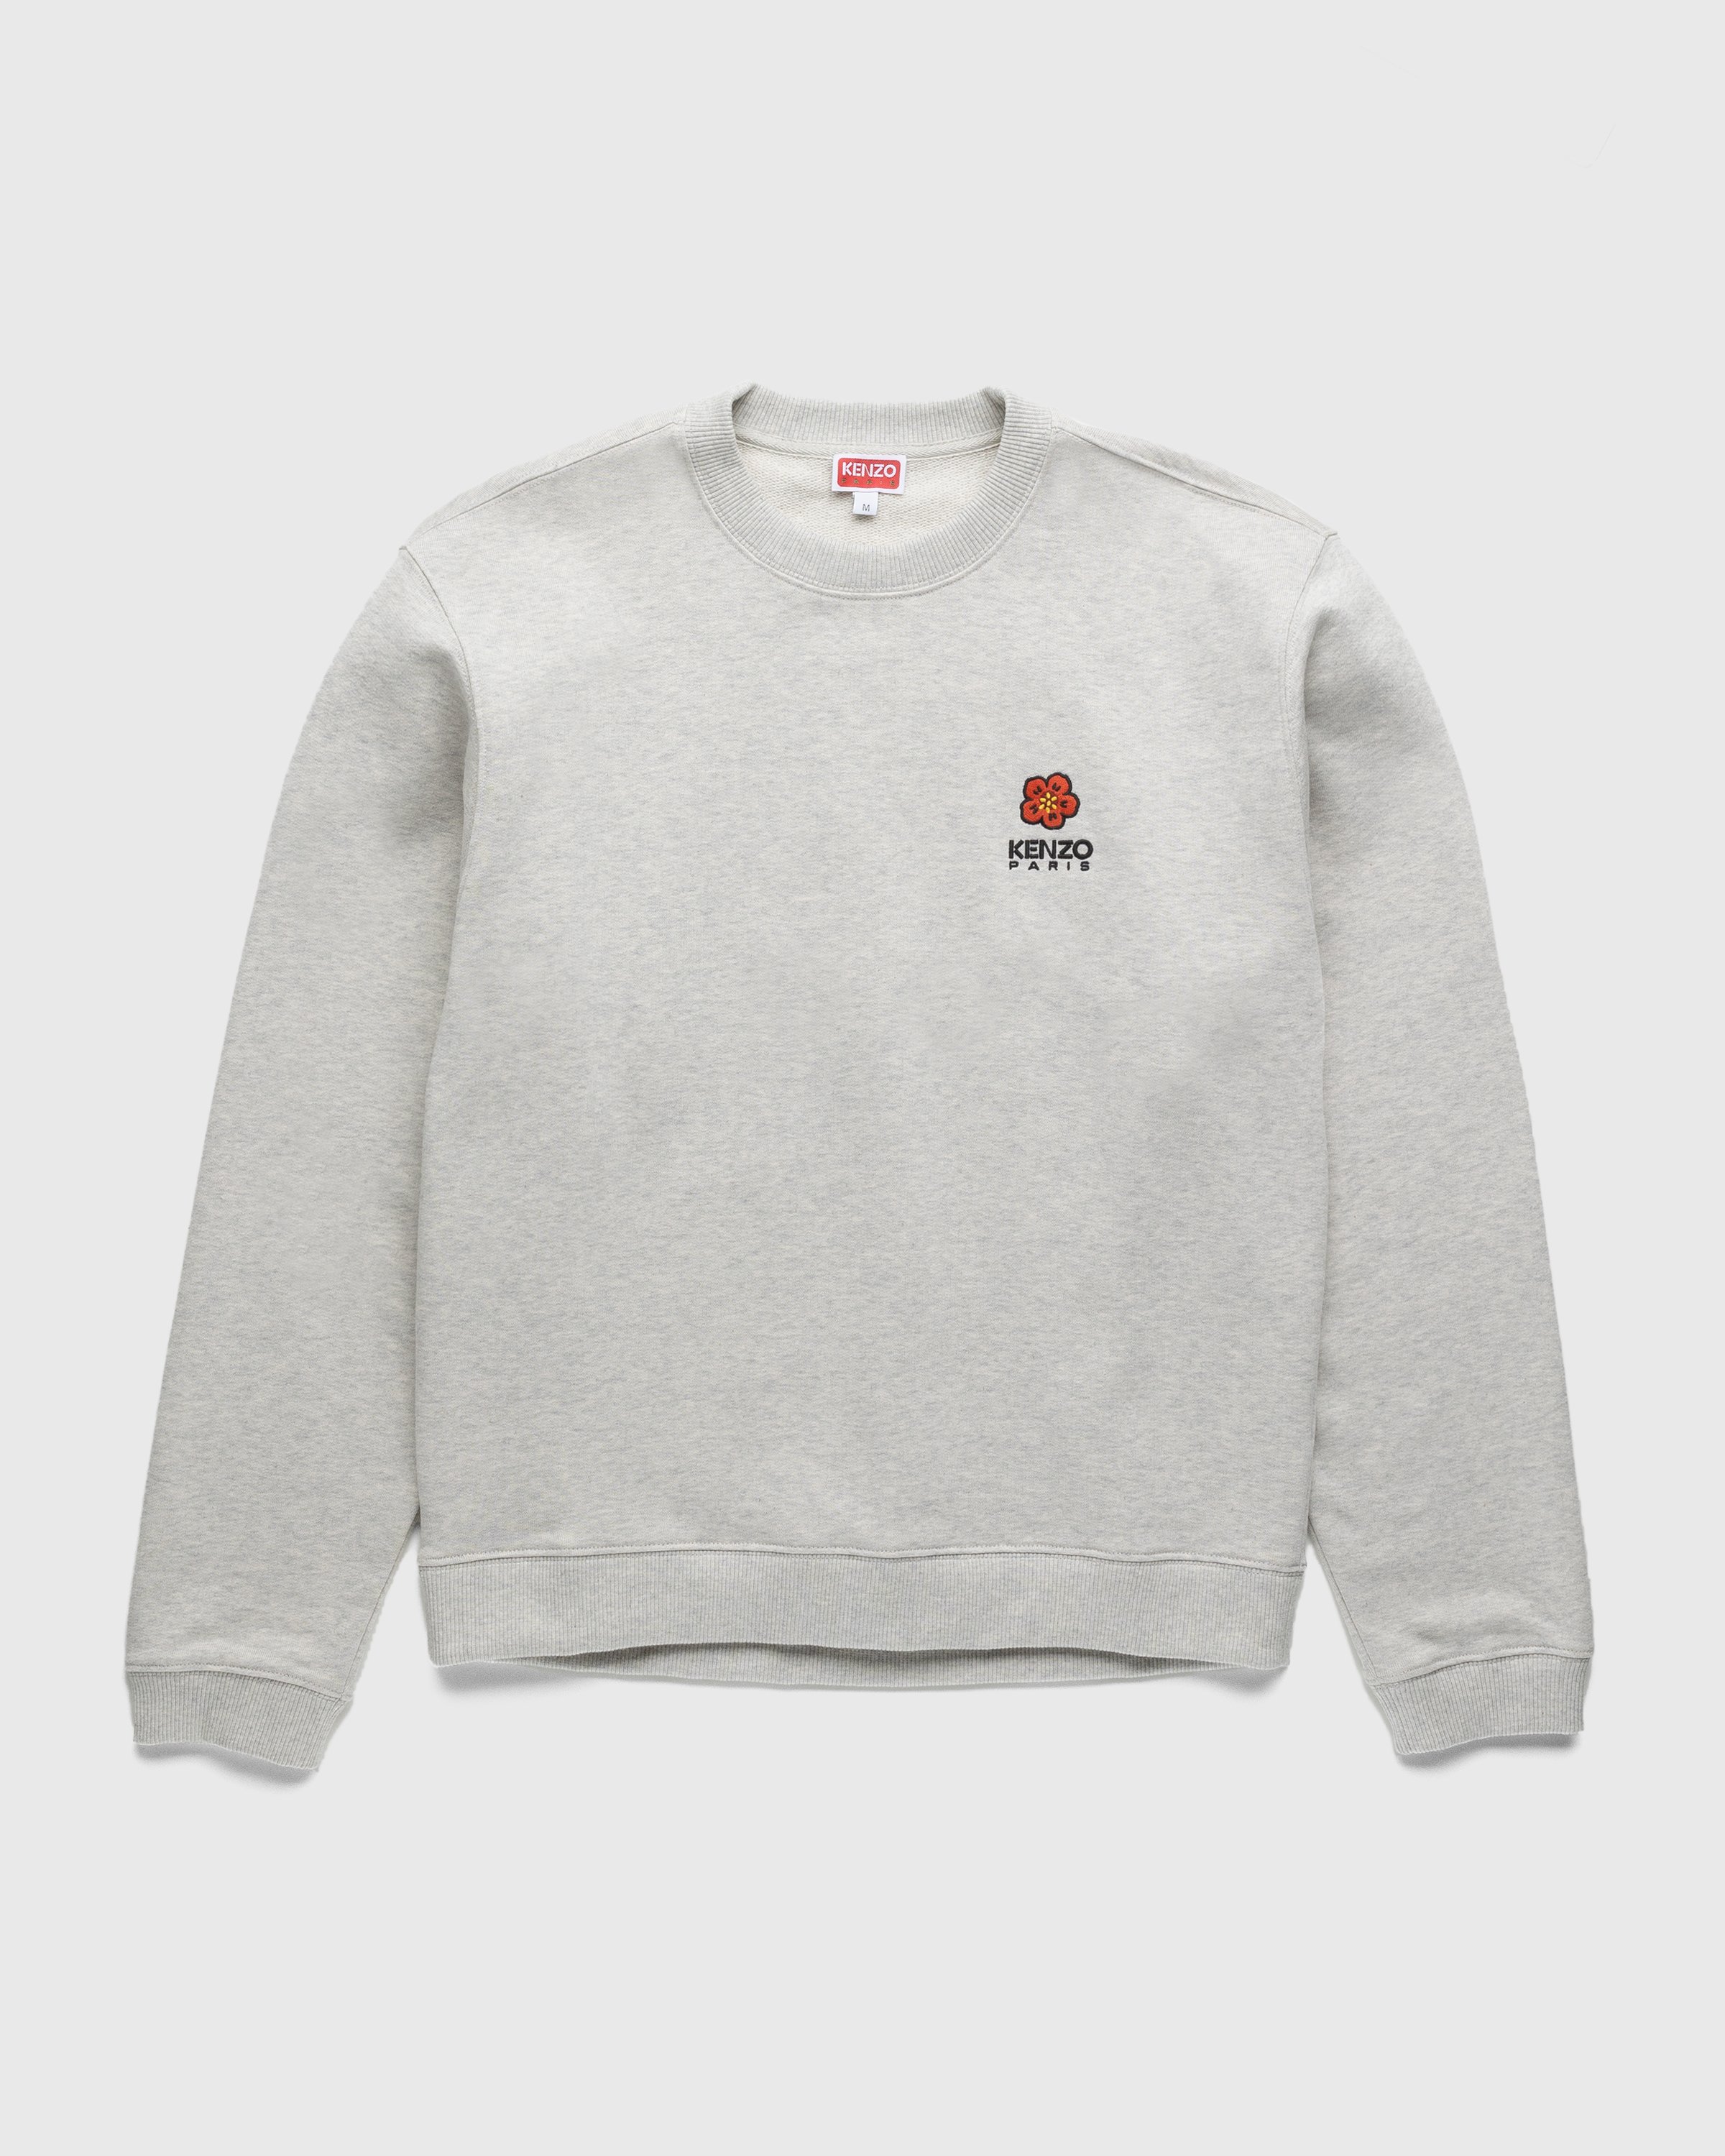 Kenzo - Boke Flower Crest Sweatshirt Pale Grey - Clothing - Grey - Image 1